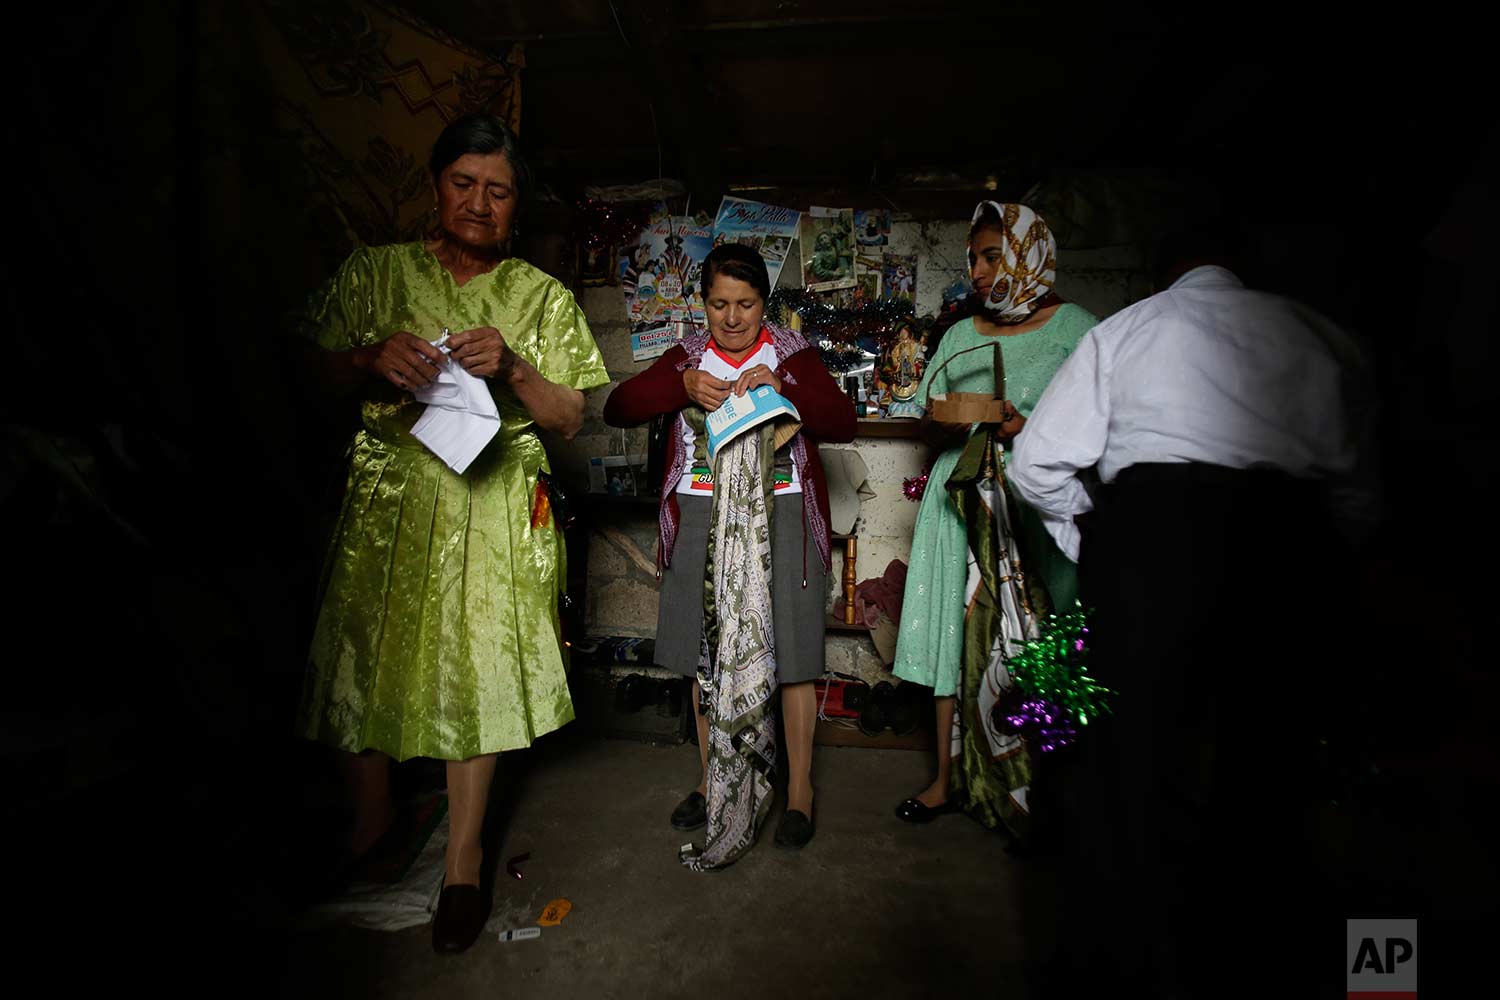  Women ready for the traditional New Year's festival known as "La Diablada", in Pillaro, Ecuador, Friday, Jan. 5, 2018. (AP Photo/Dolores Ochoa) 